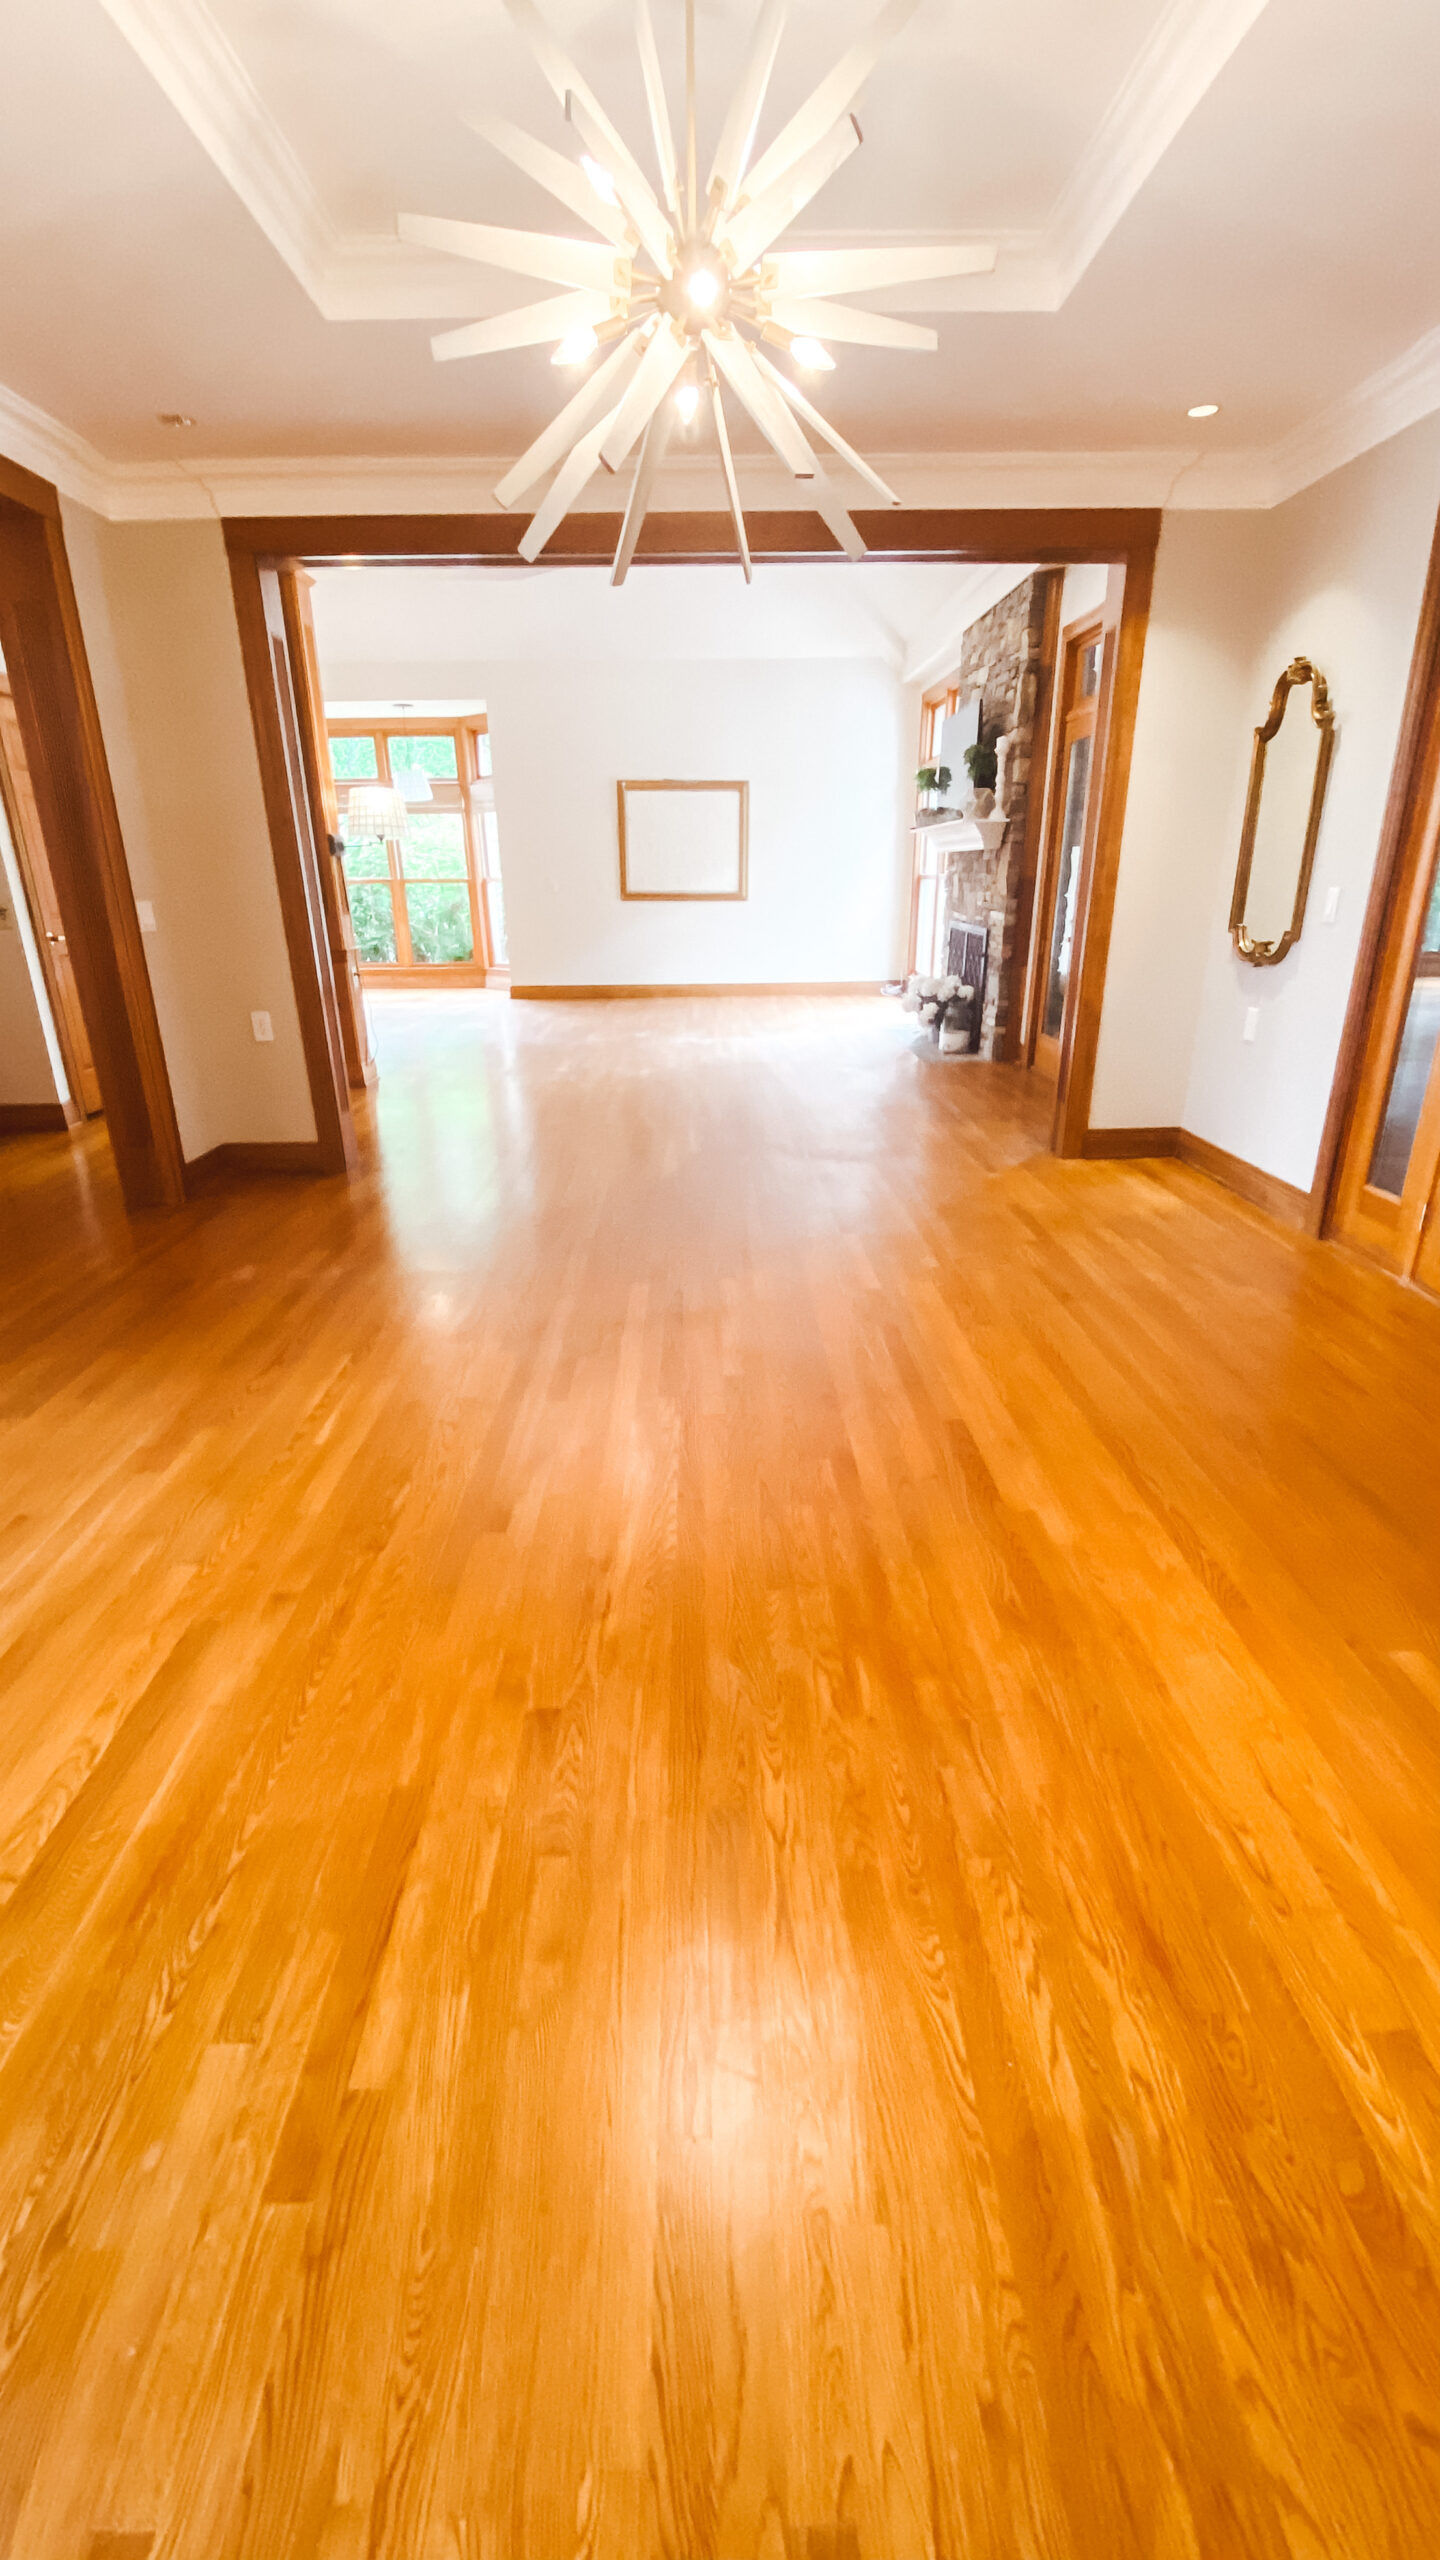 Hardwood floor that looks orange